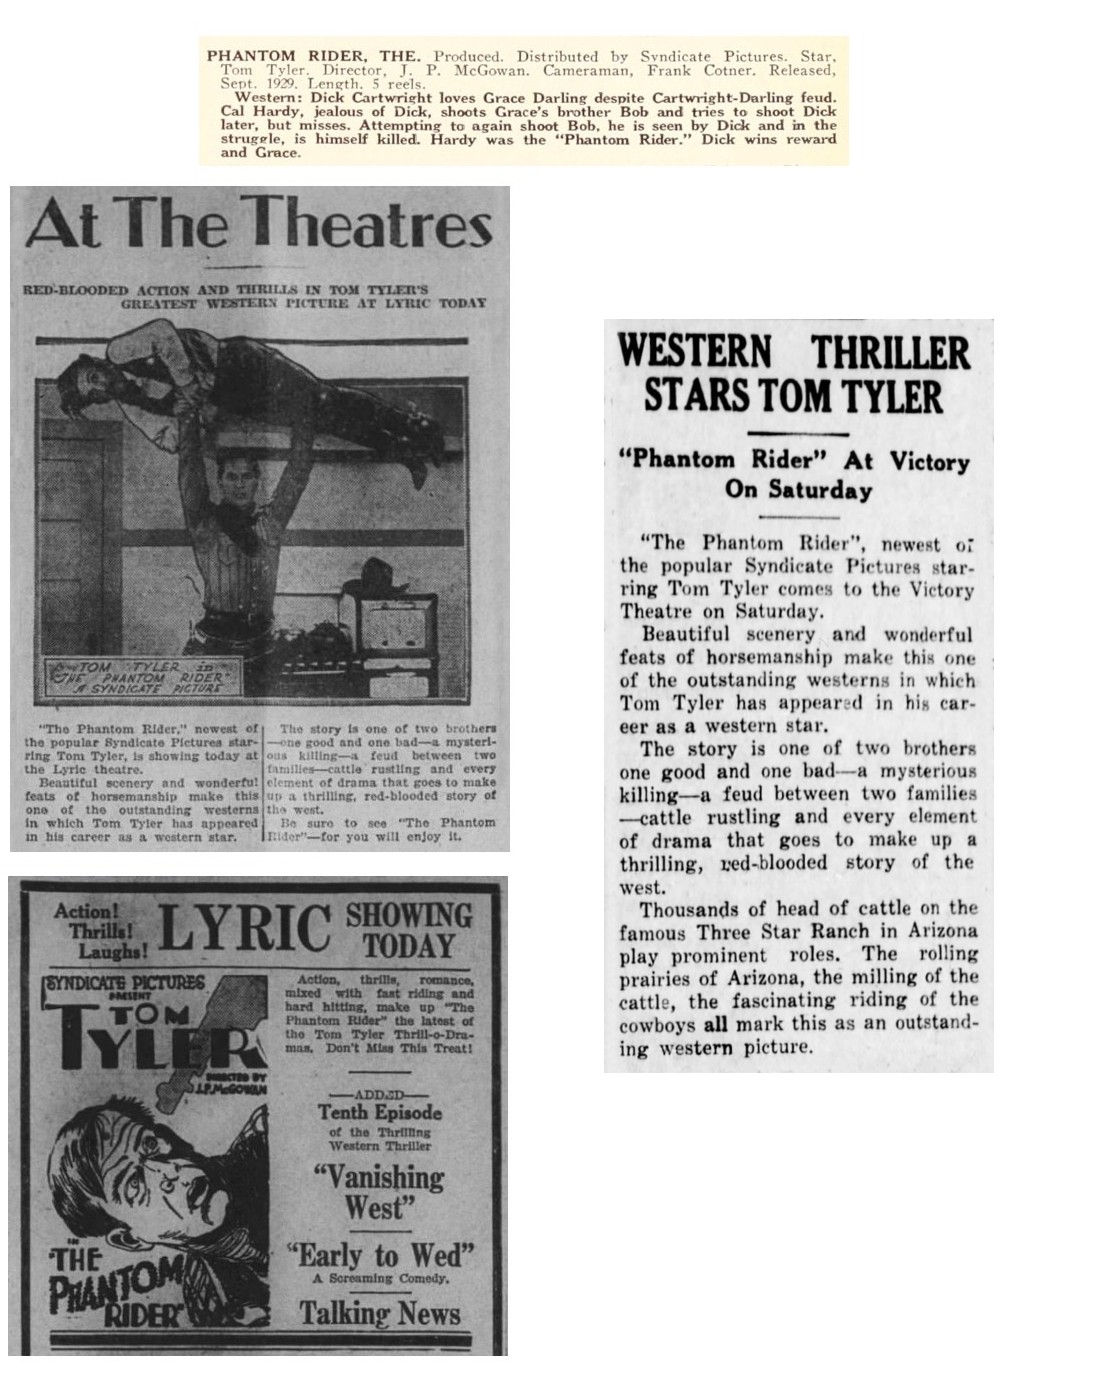 The Phantom Rider Republican and Herald Pottsville PA Jan 25 1930 cinema ads